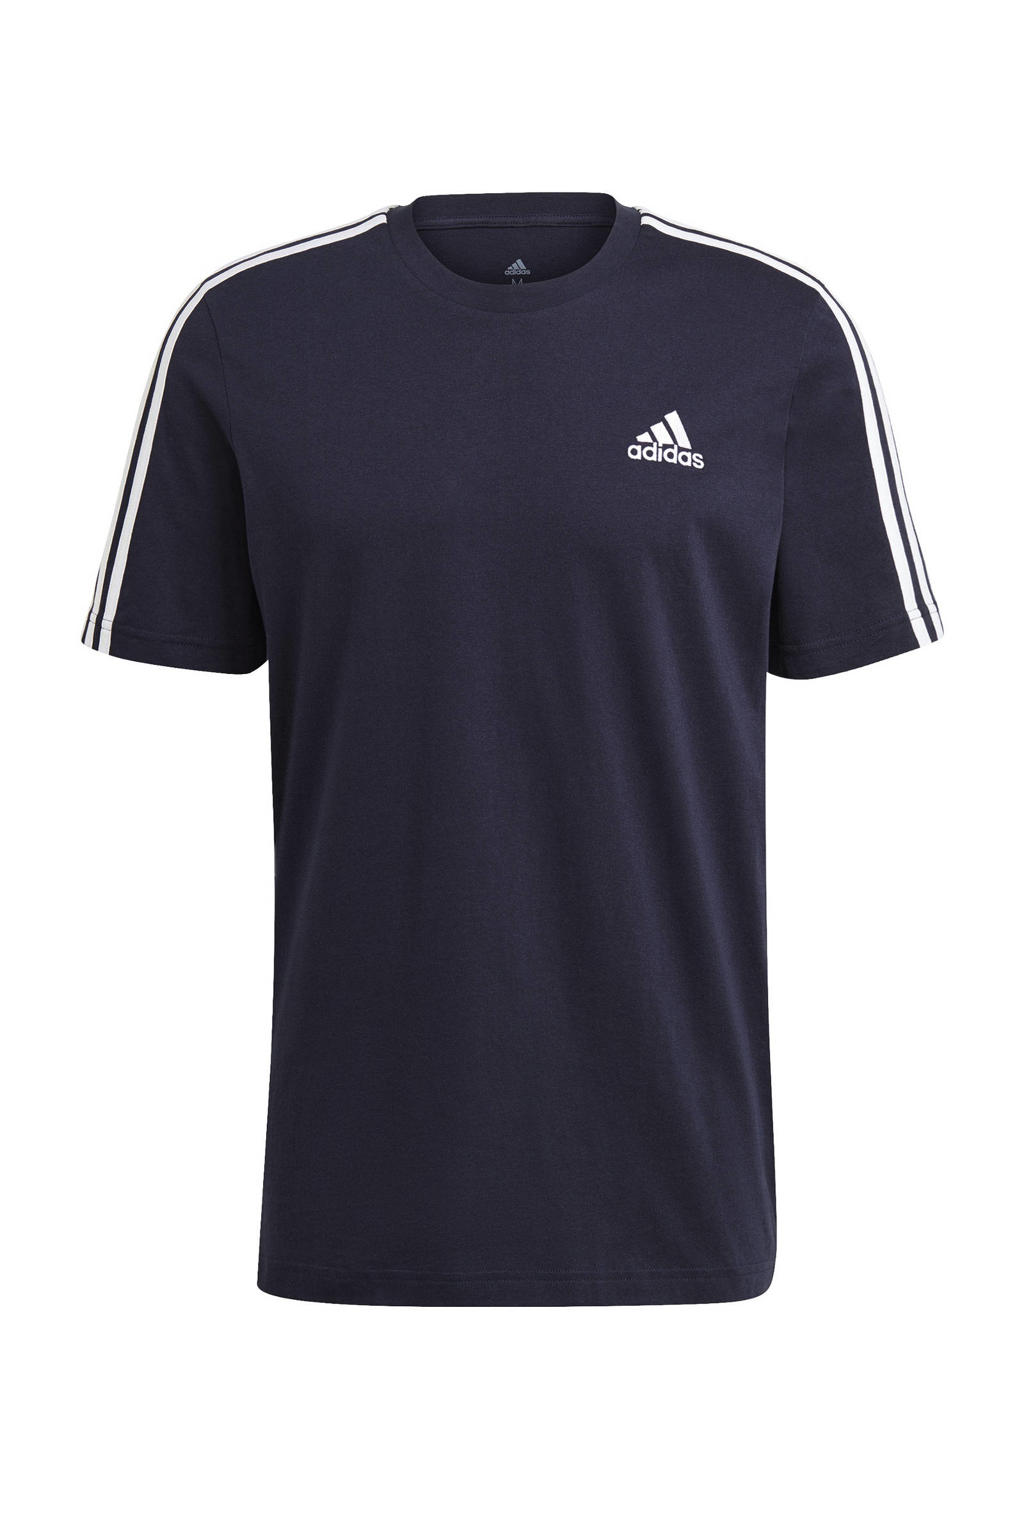 adidas Performance   sport T-shirt donkerblauw/wit